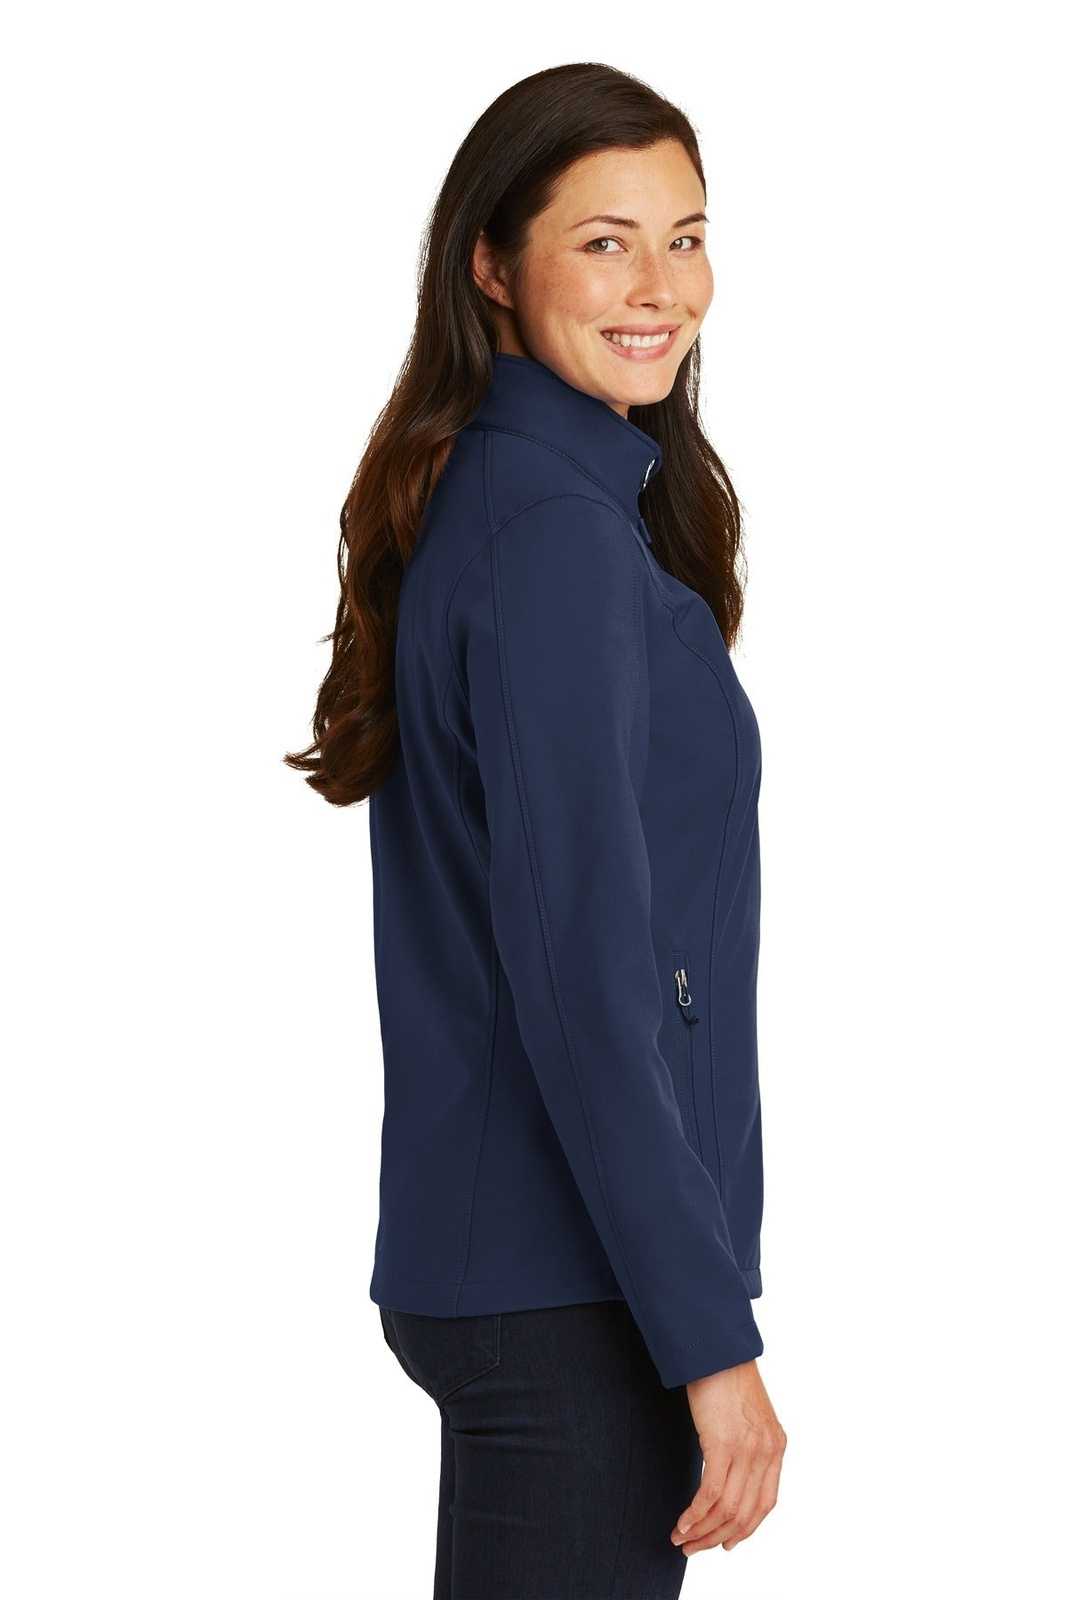 Port Authority L317 Ladies Core Soft Shell Jacket - Dress Blue Navy - HIT a Double - 3